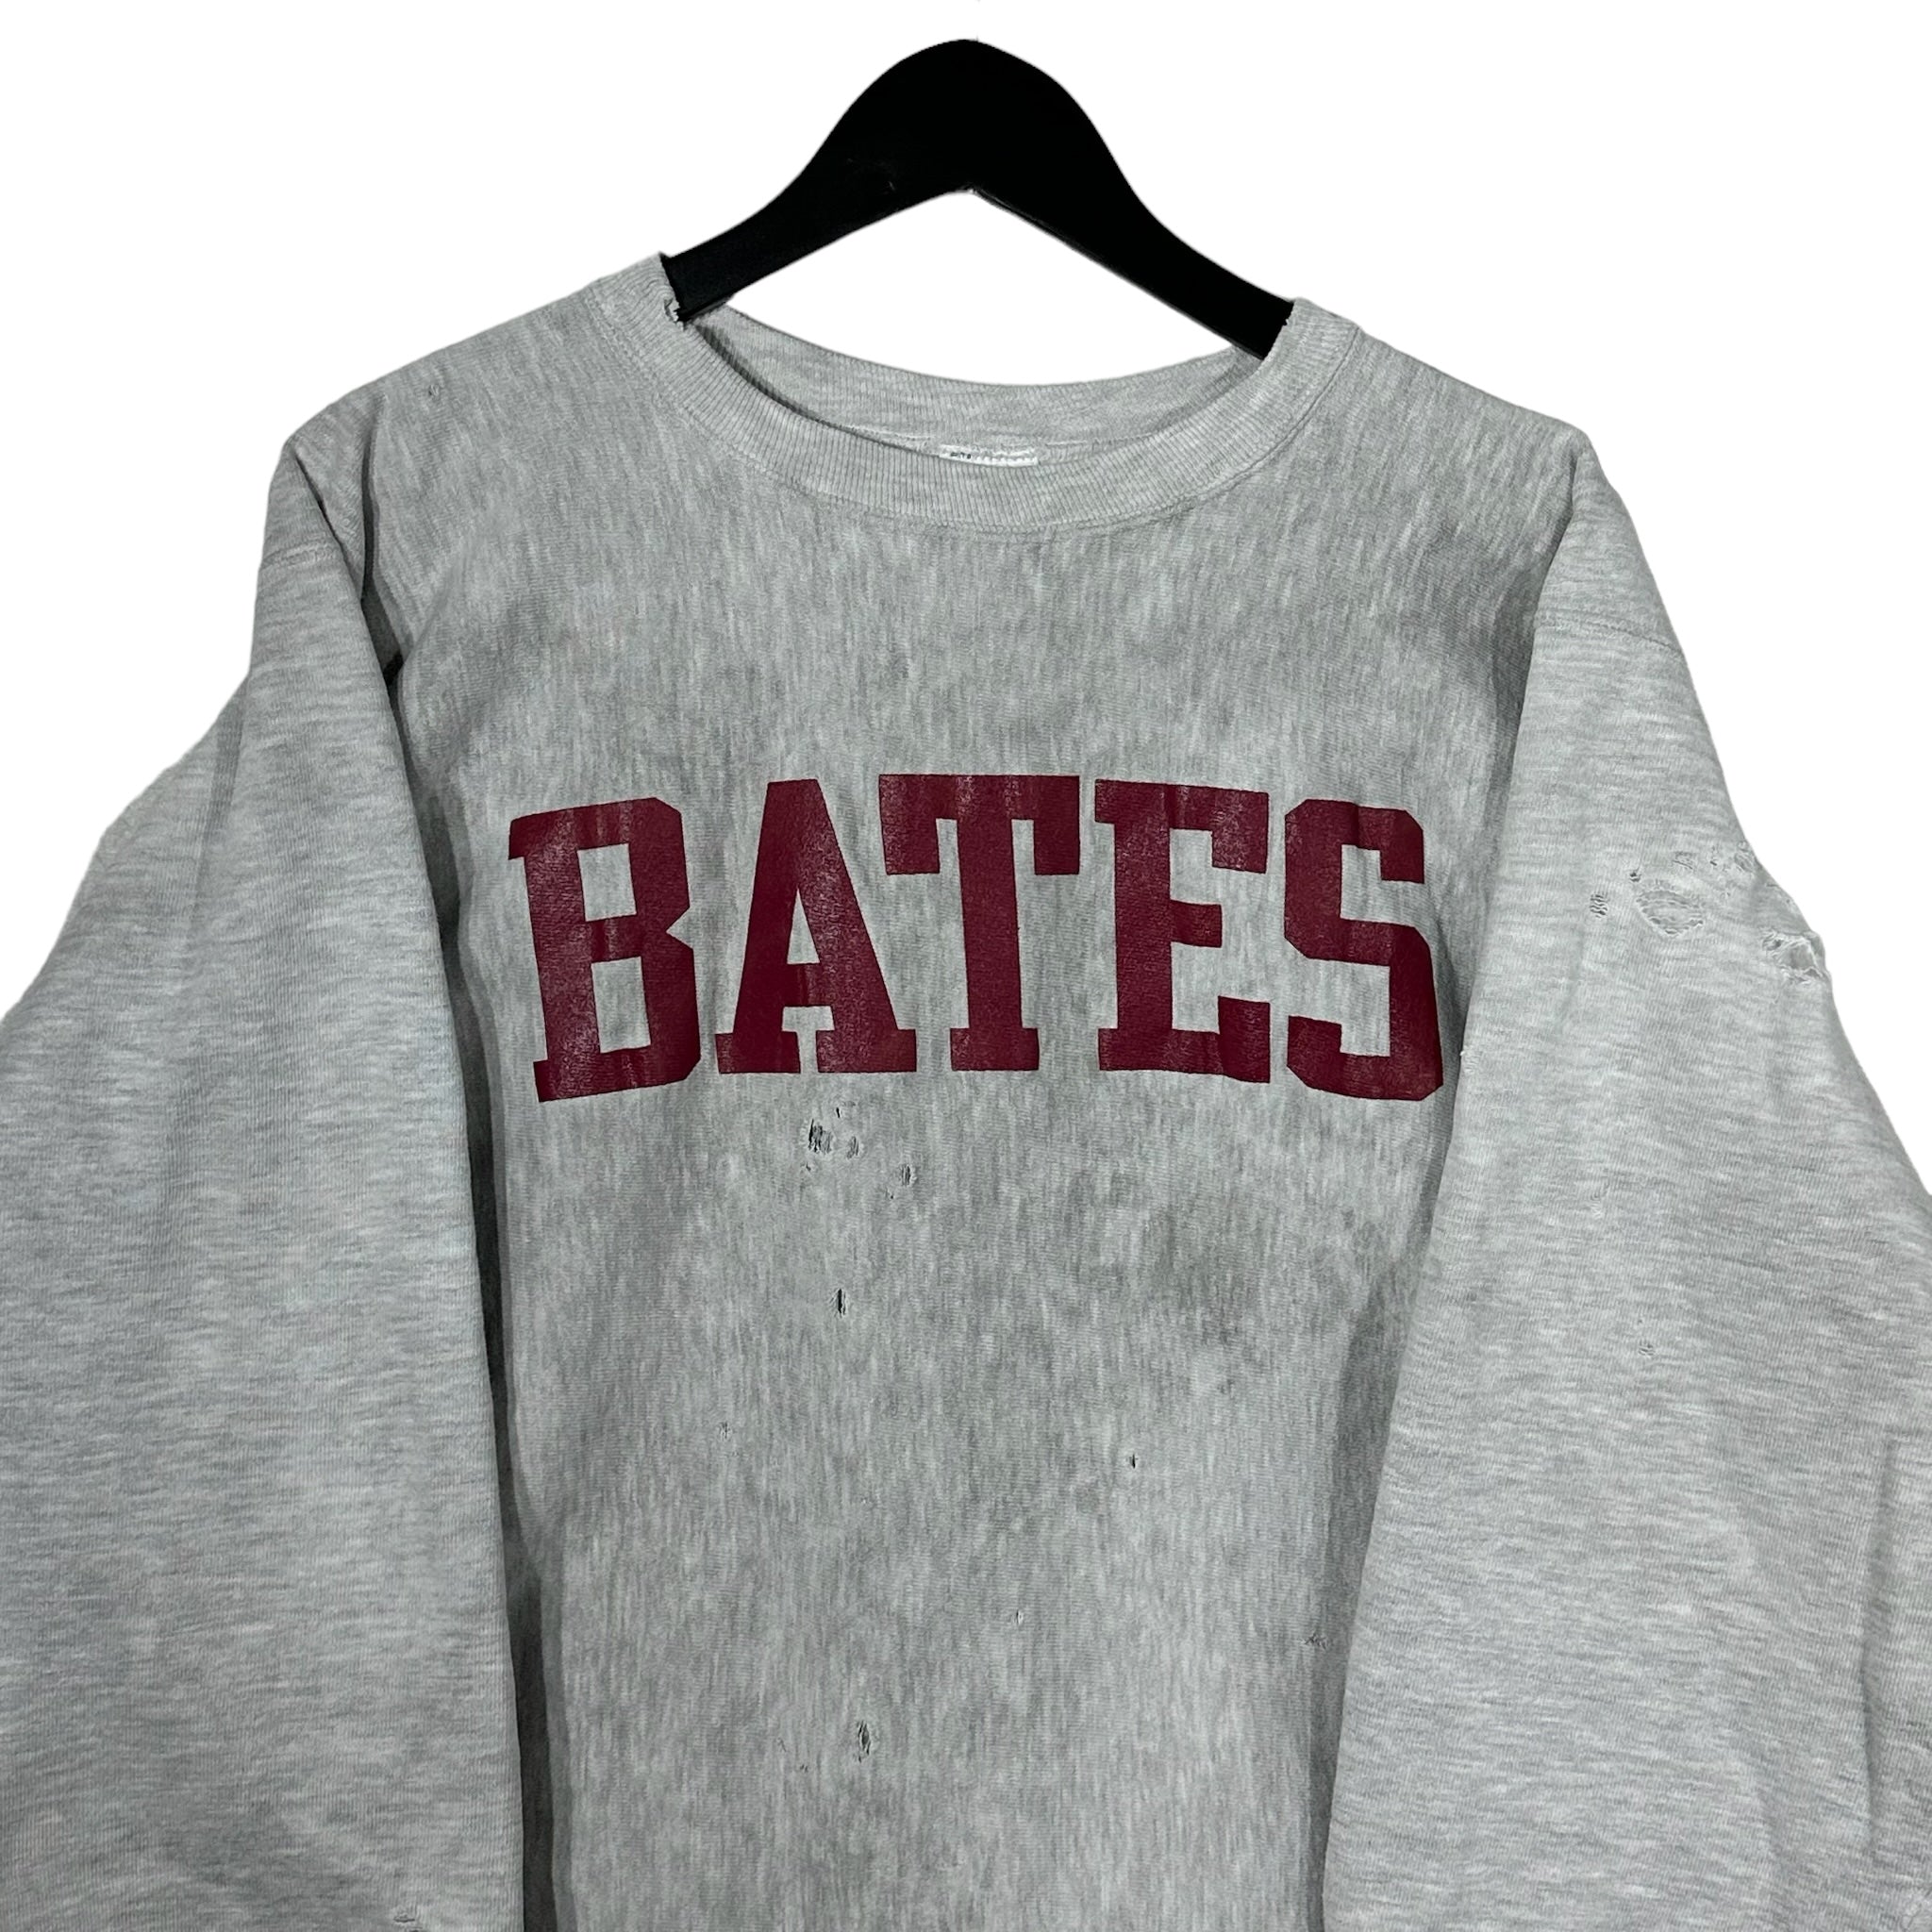 Vintage Distressed Bates College Reverse Weave Crewneck 90's